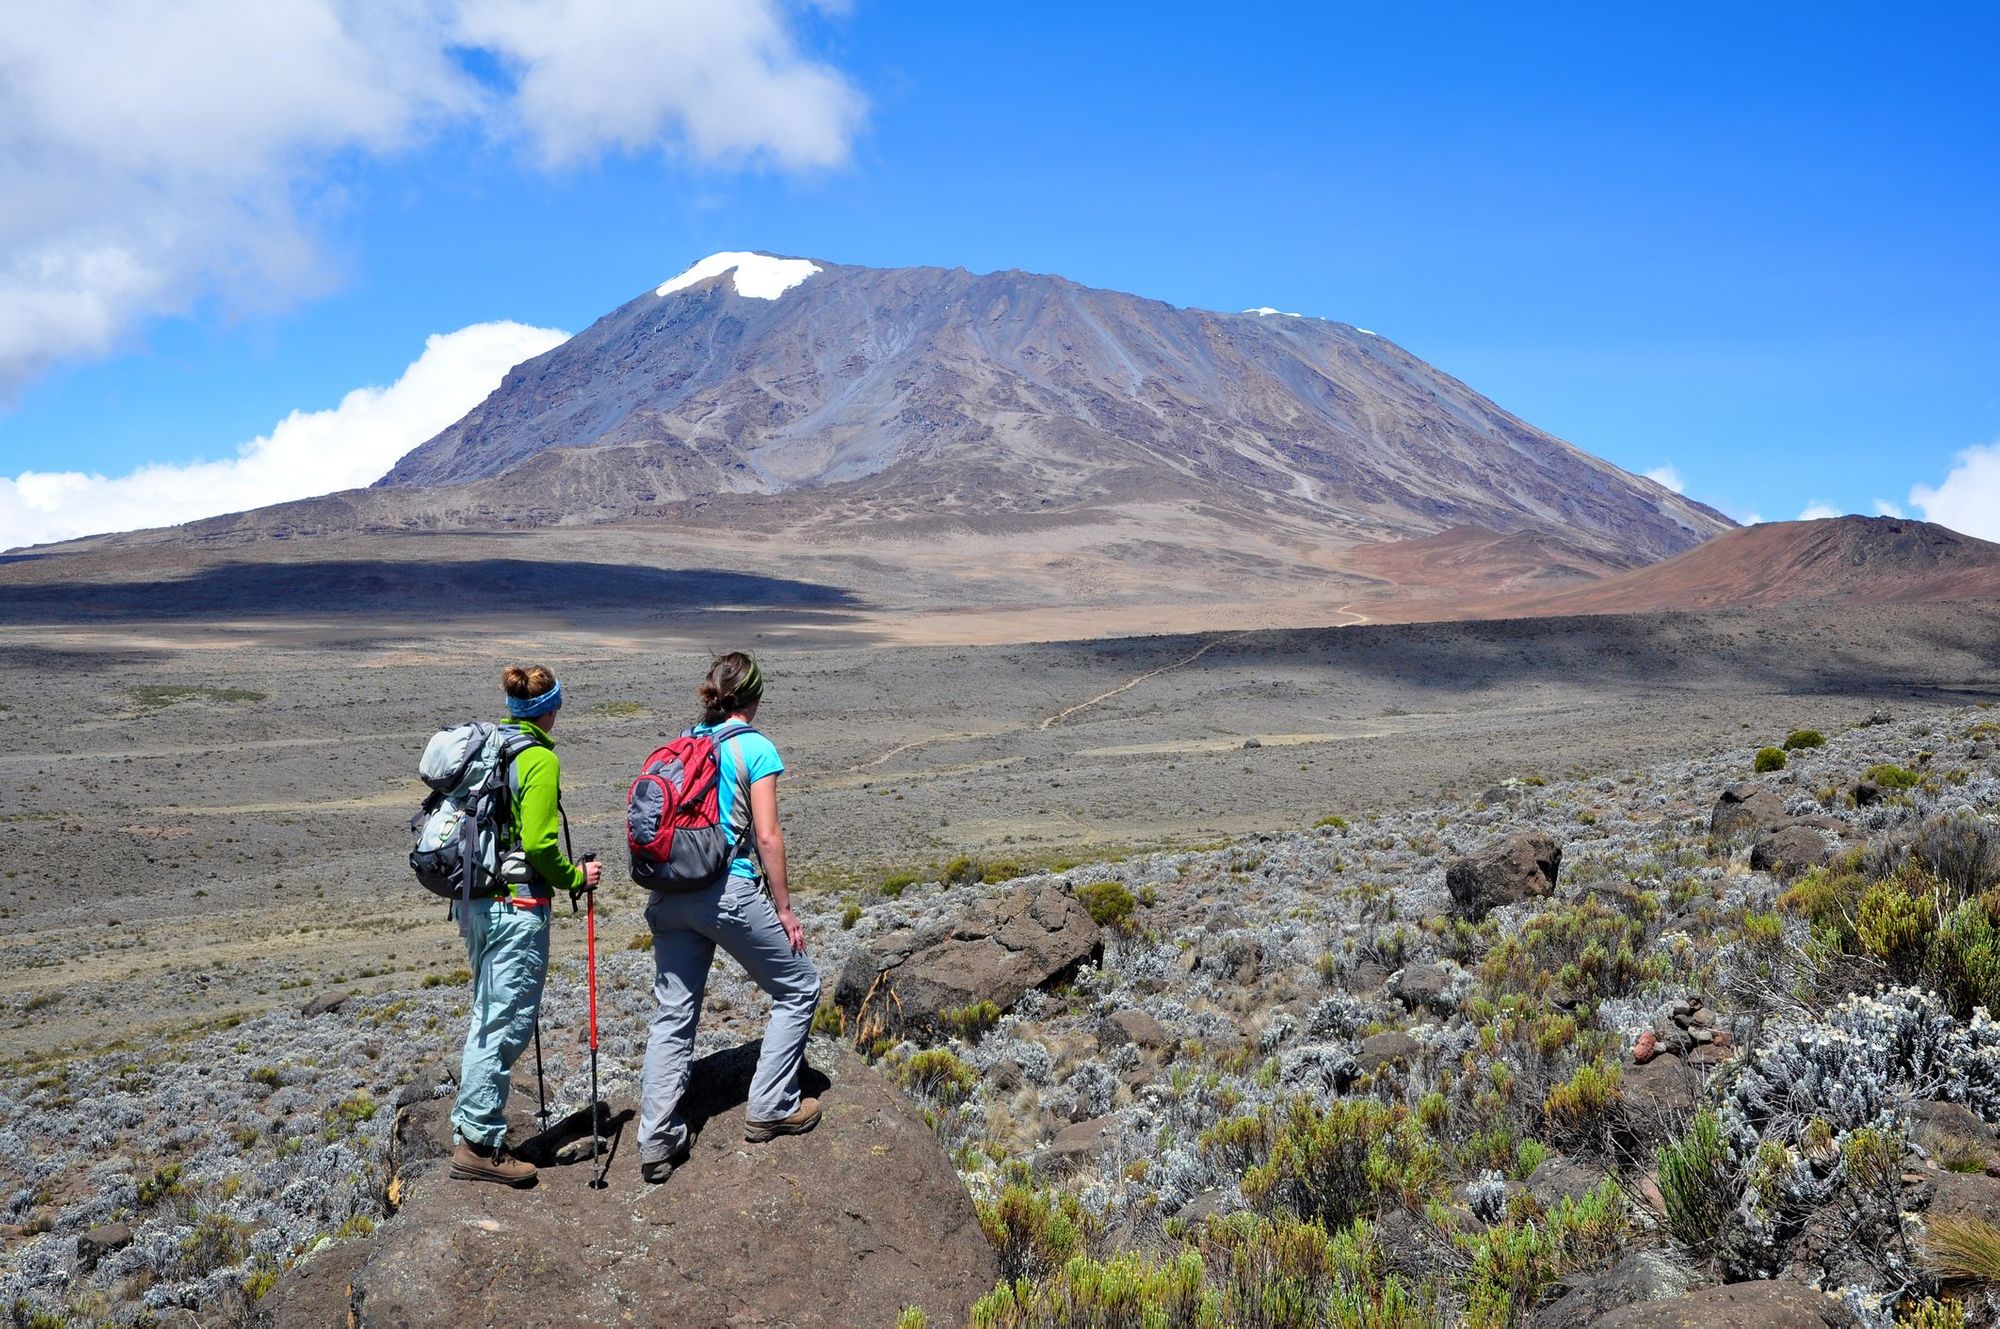 Hikers gazing at the summit of Kilimanjaro